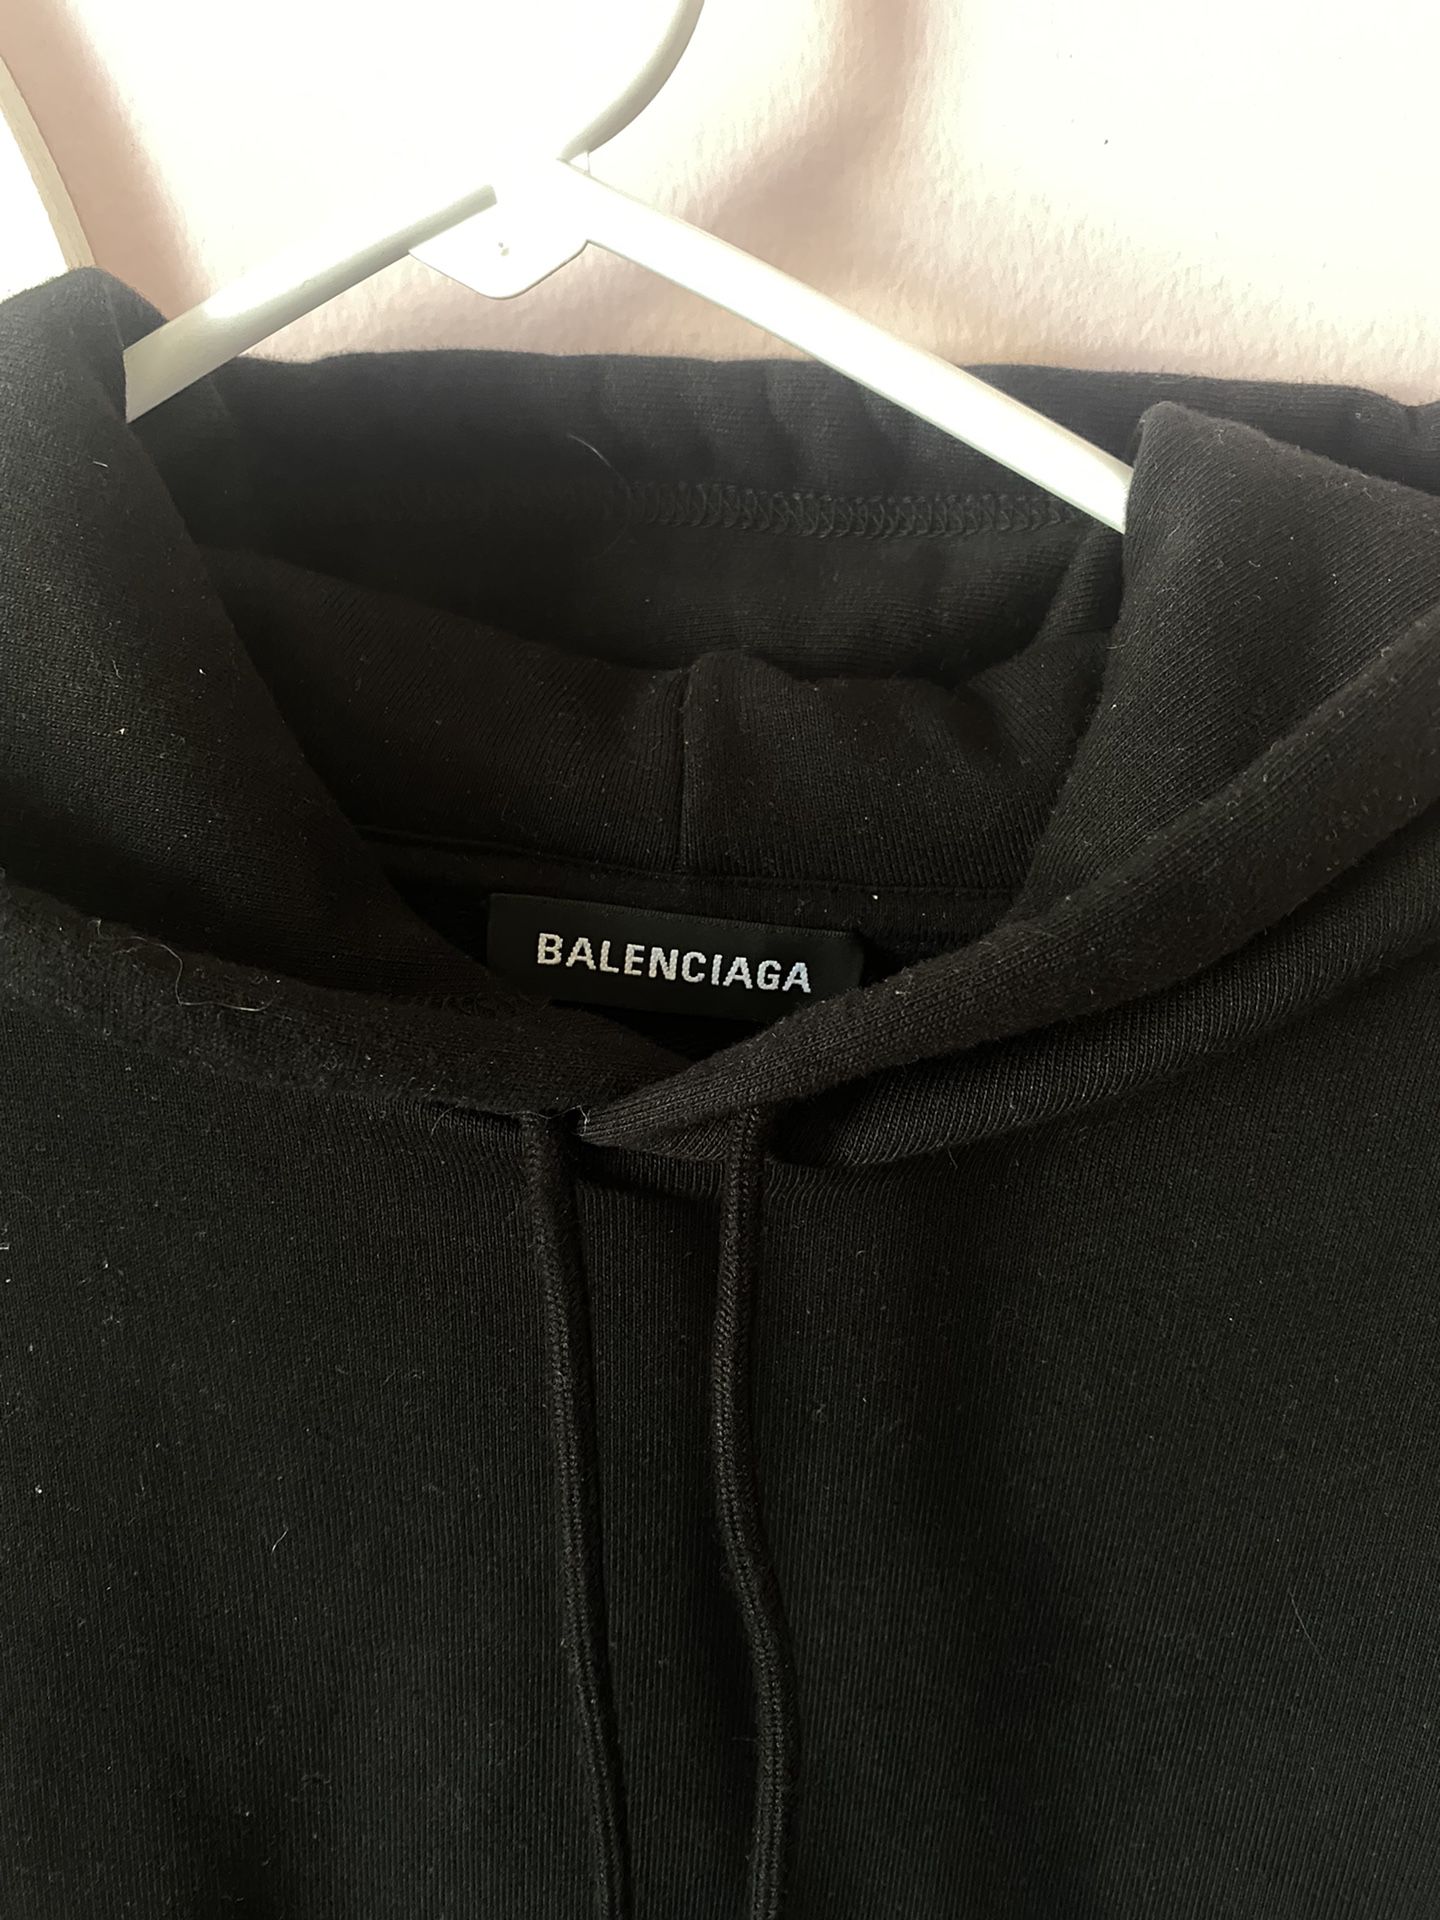 Gucci Balenciaga Collab Sweatshirt for Sale in Austin, TX - OfferUp